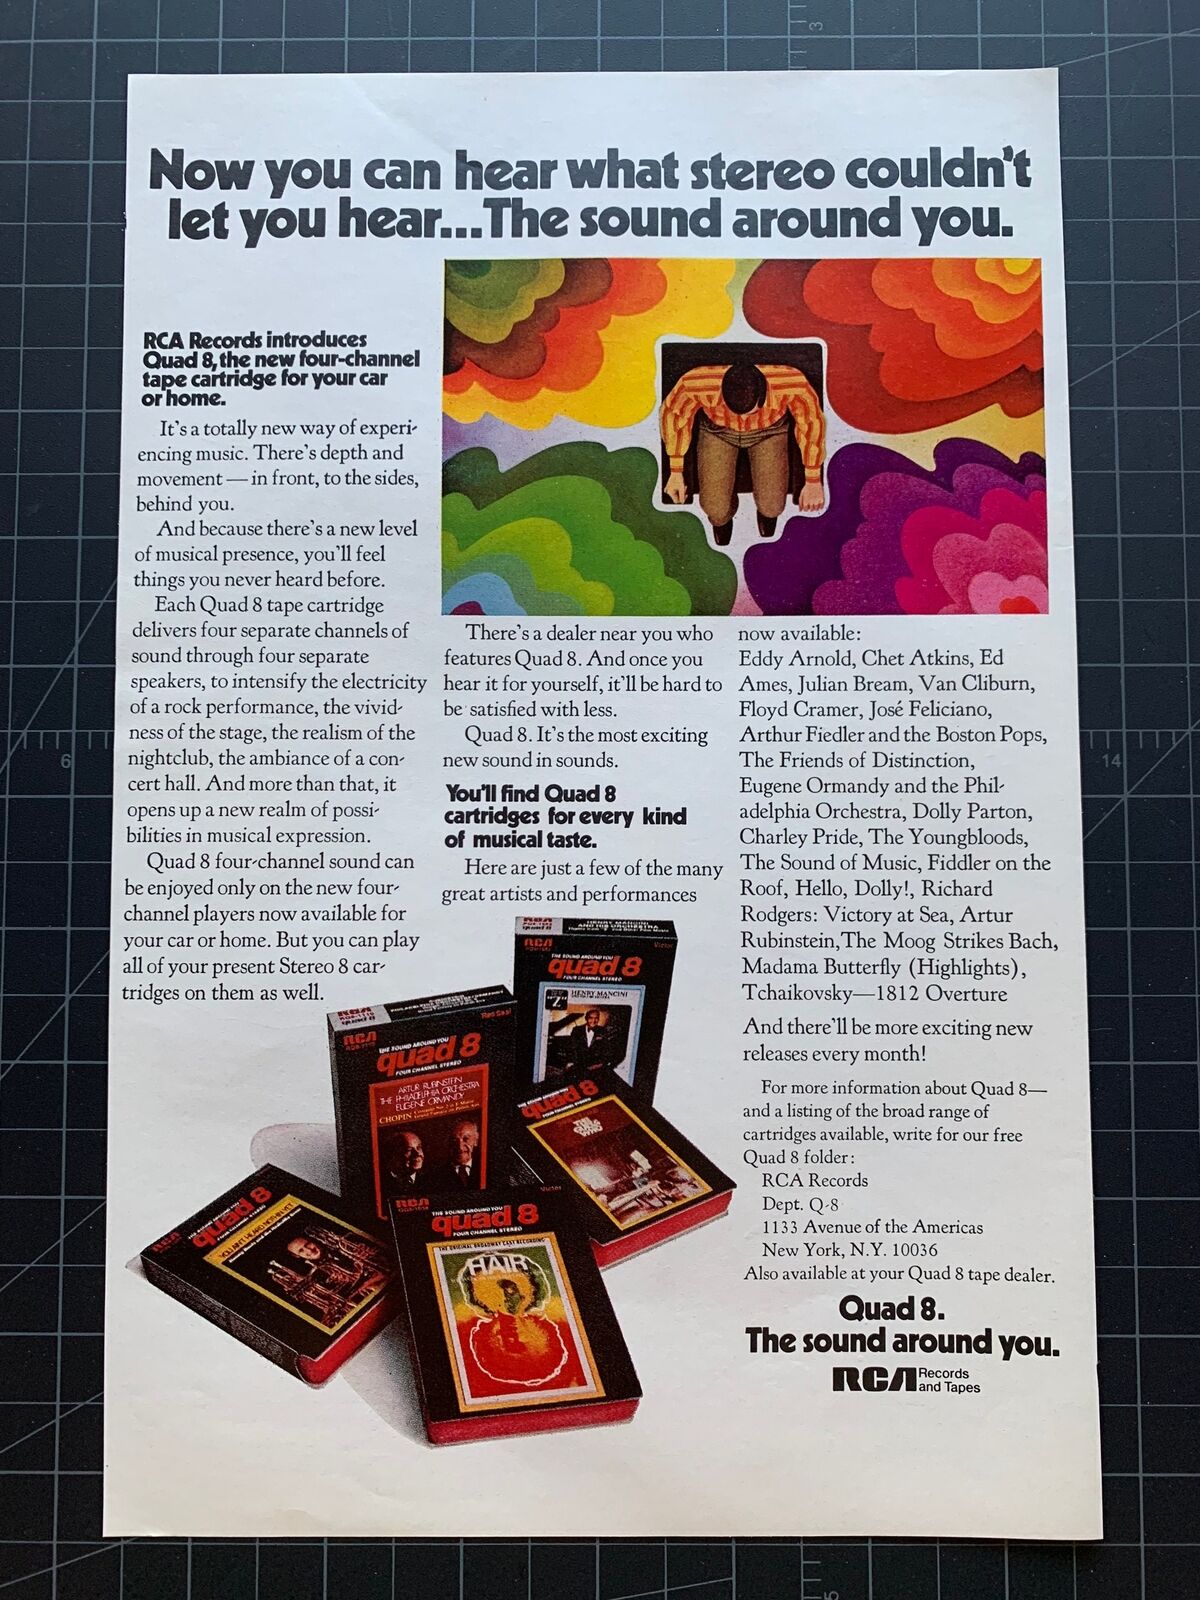 Vintage 1971 RCA Stereo Quad 8 Tapes Print Ad